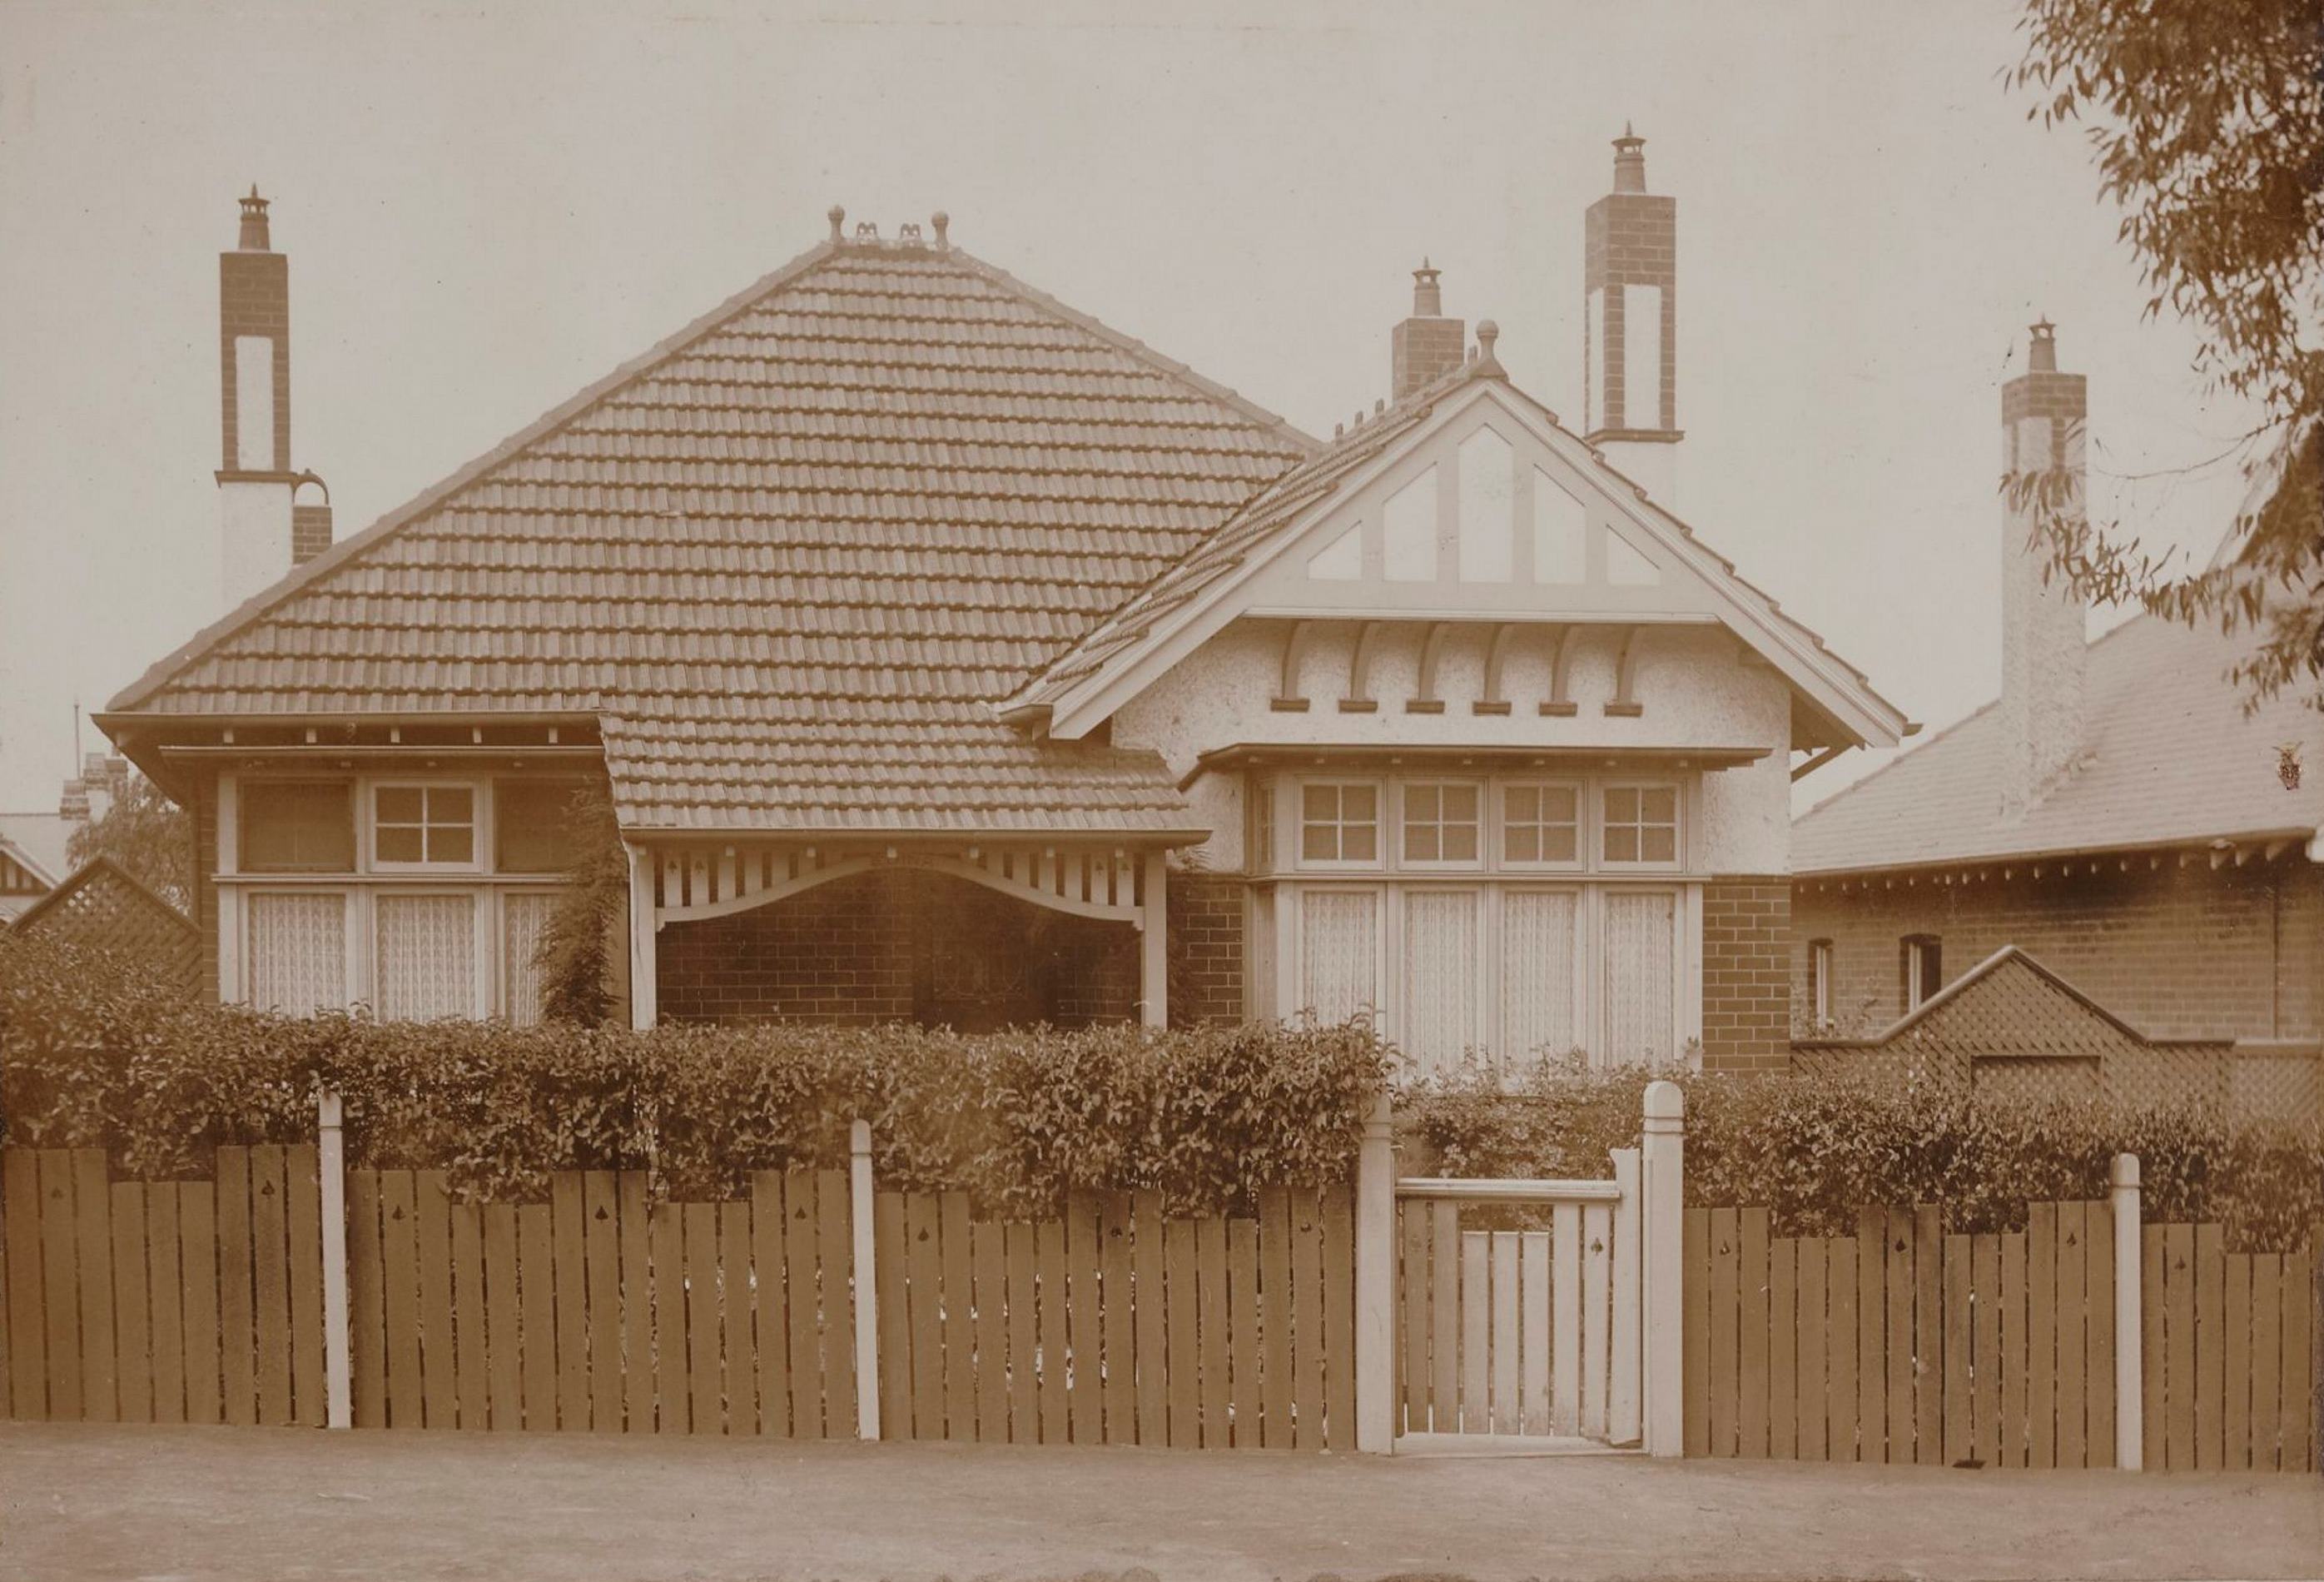 Residence, Haberfield, N.S.W. around 1913  / photographer unknown